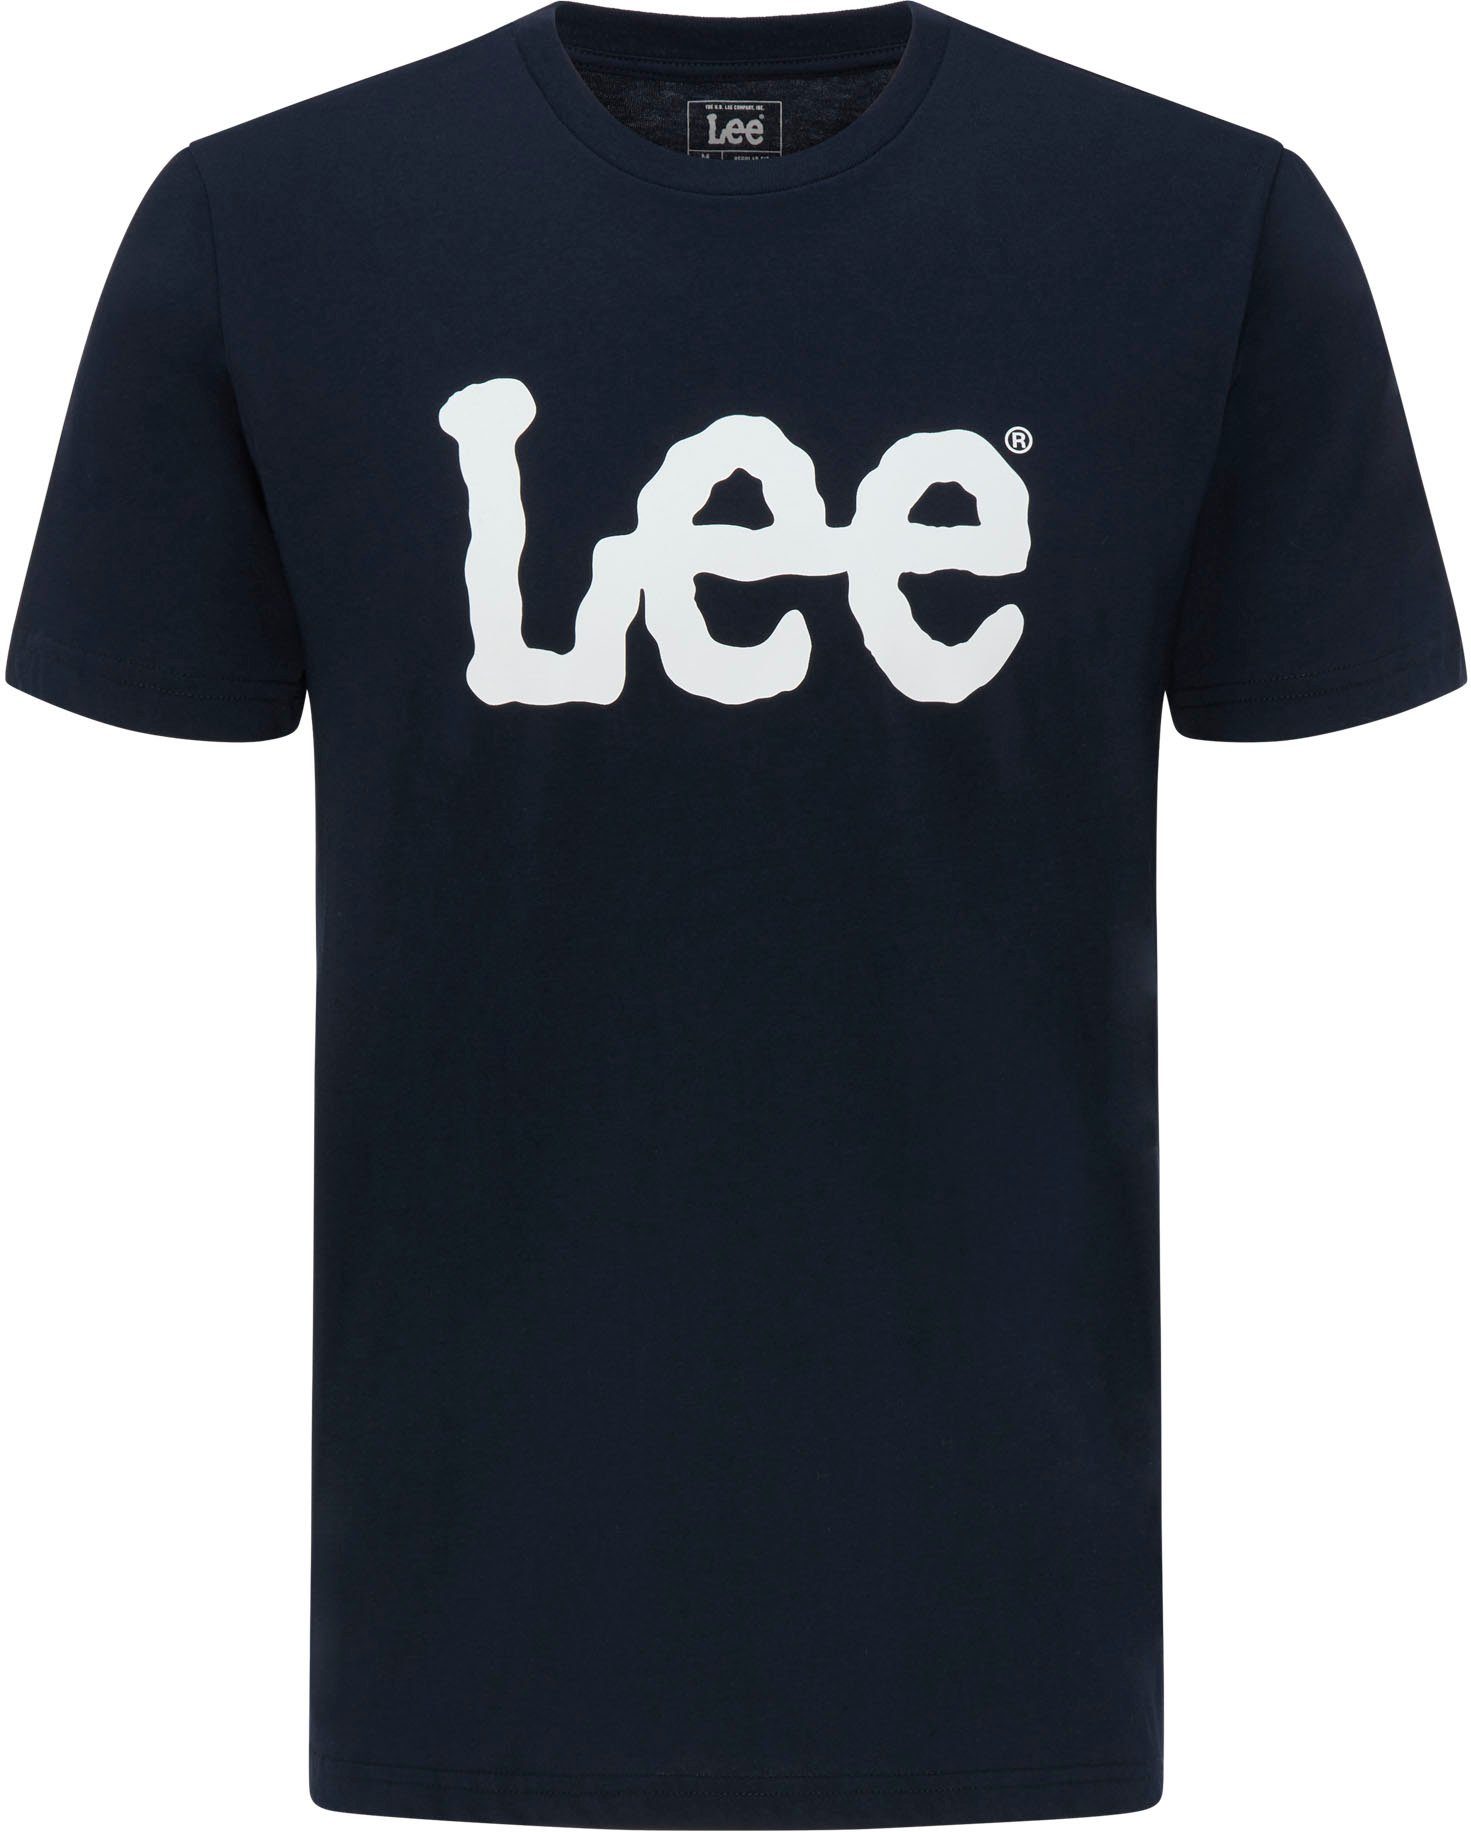 Lee® T-Shirt navy TEE LOGO drop Wobbly